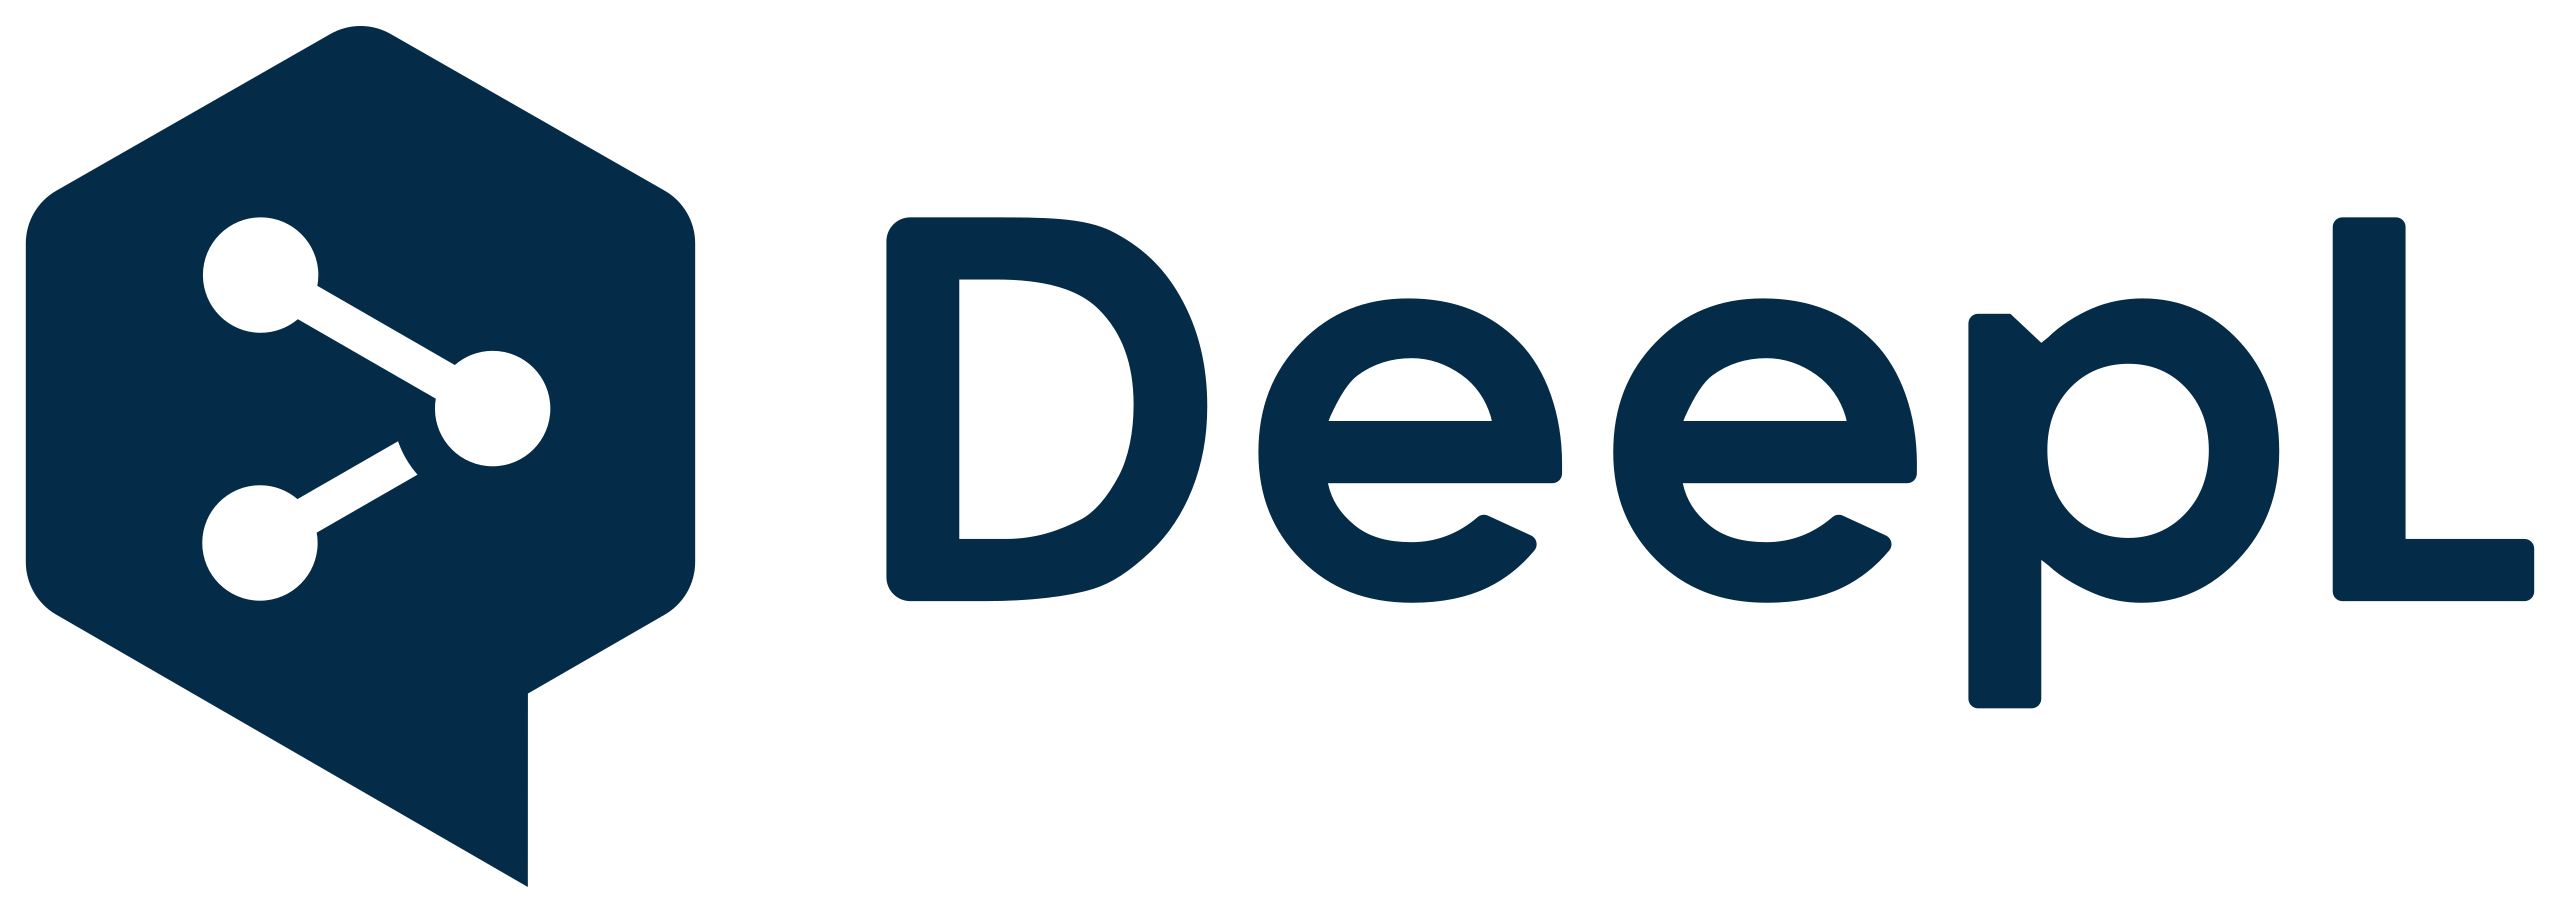 DeepL_logo.